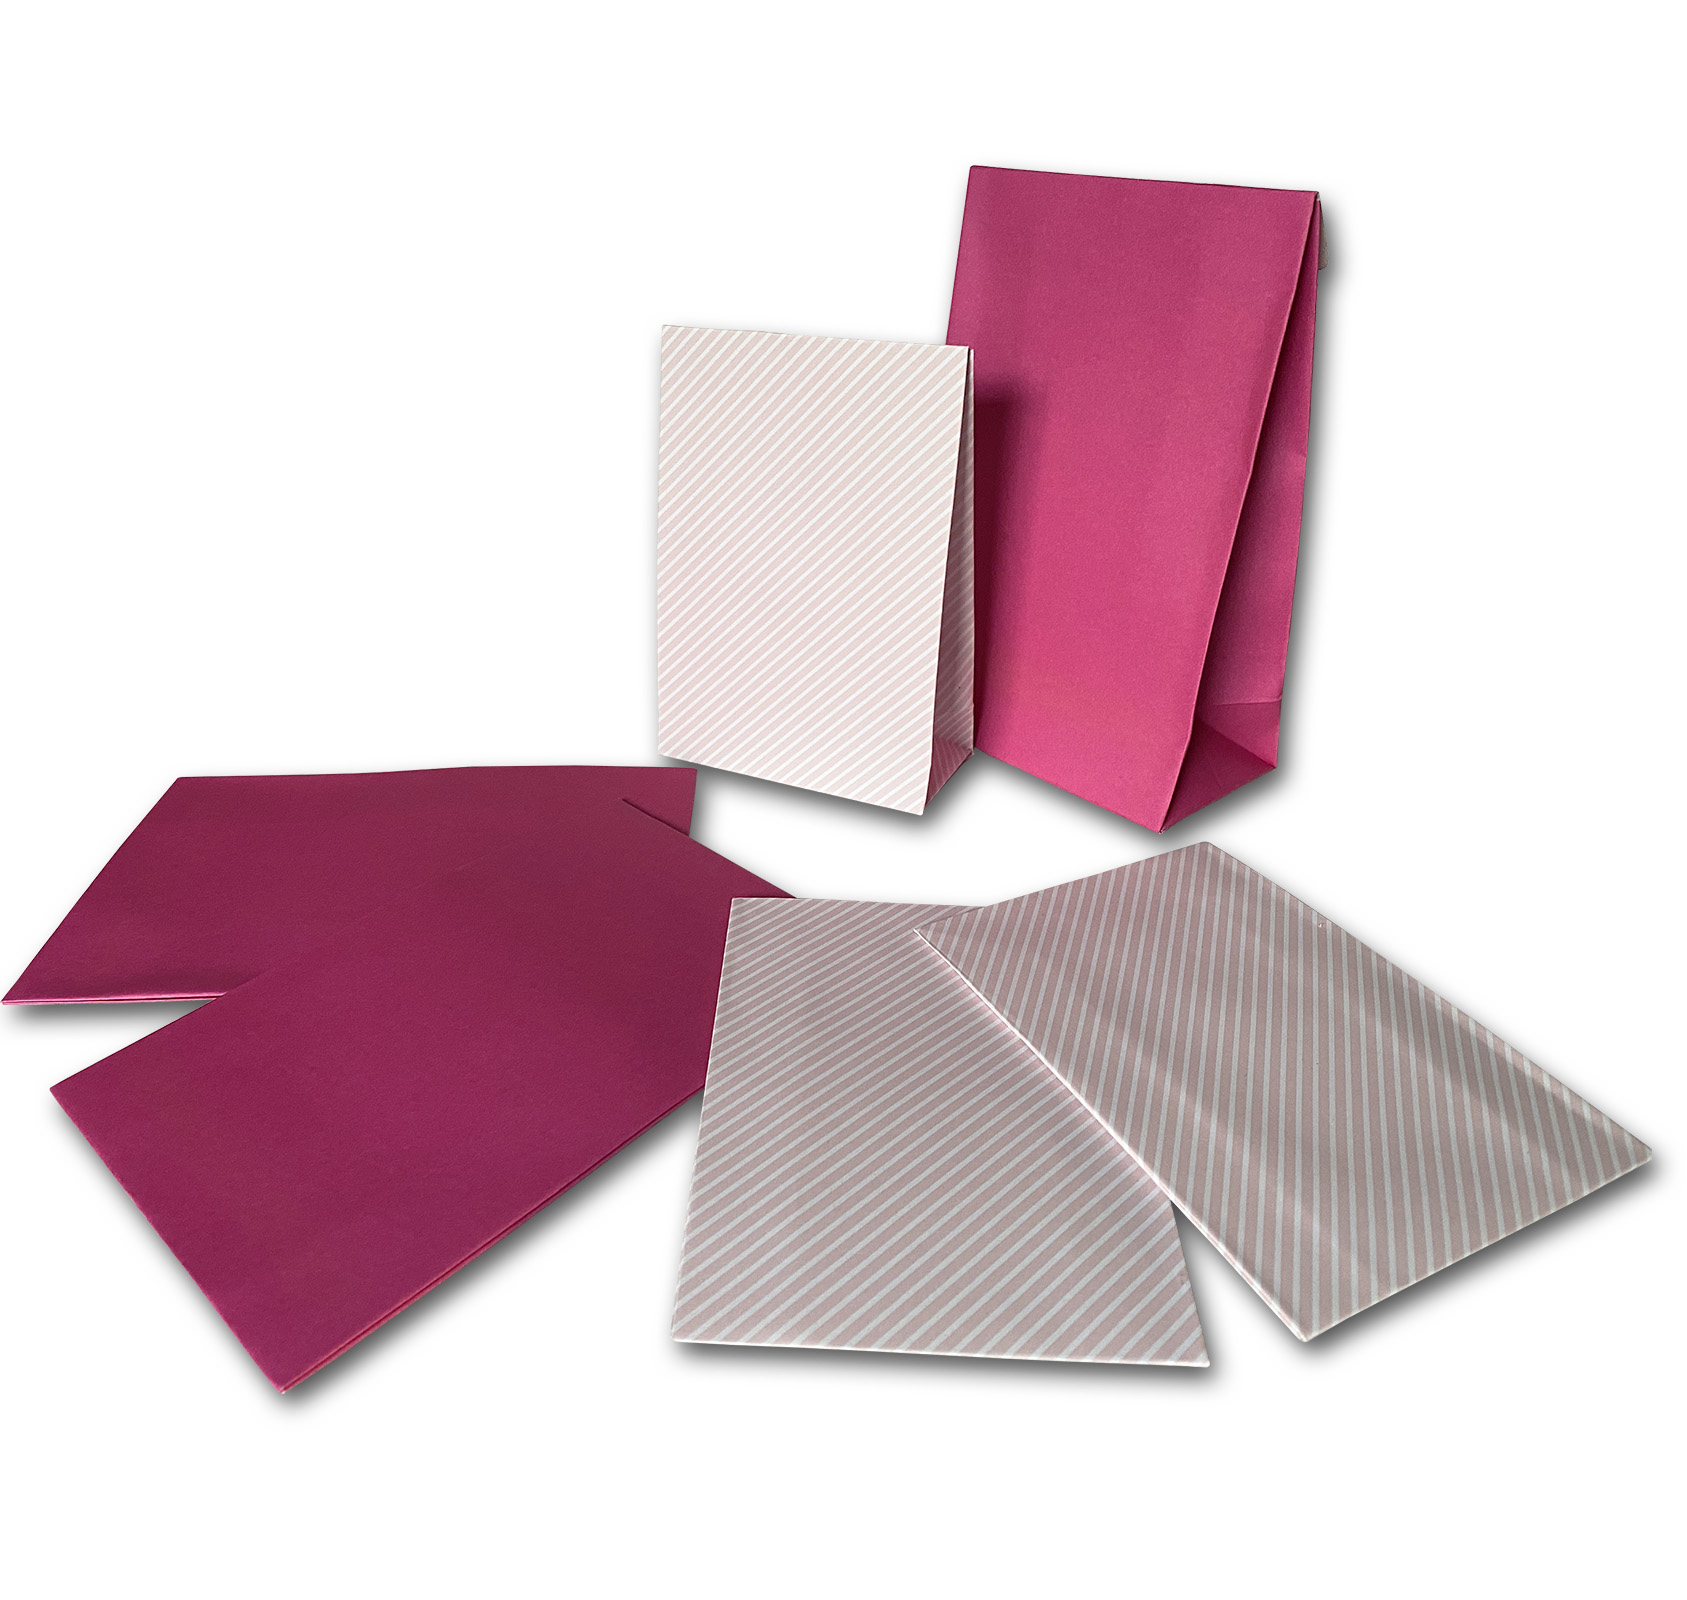 PODARI diy Advent calendar self crafting 24 paper bags pink in 2 sizes | 12.5 x 19 cm &amp; 10.5 x 15 cm | Christmas